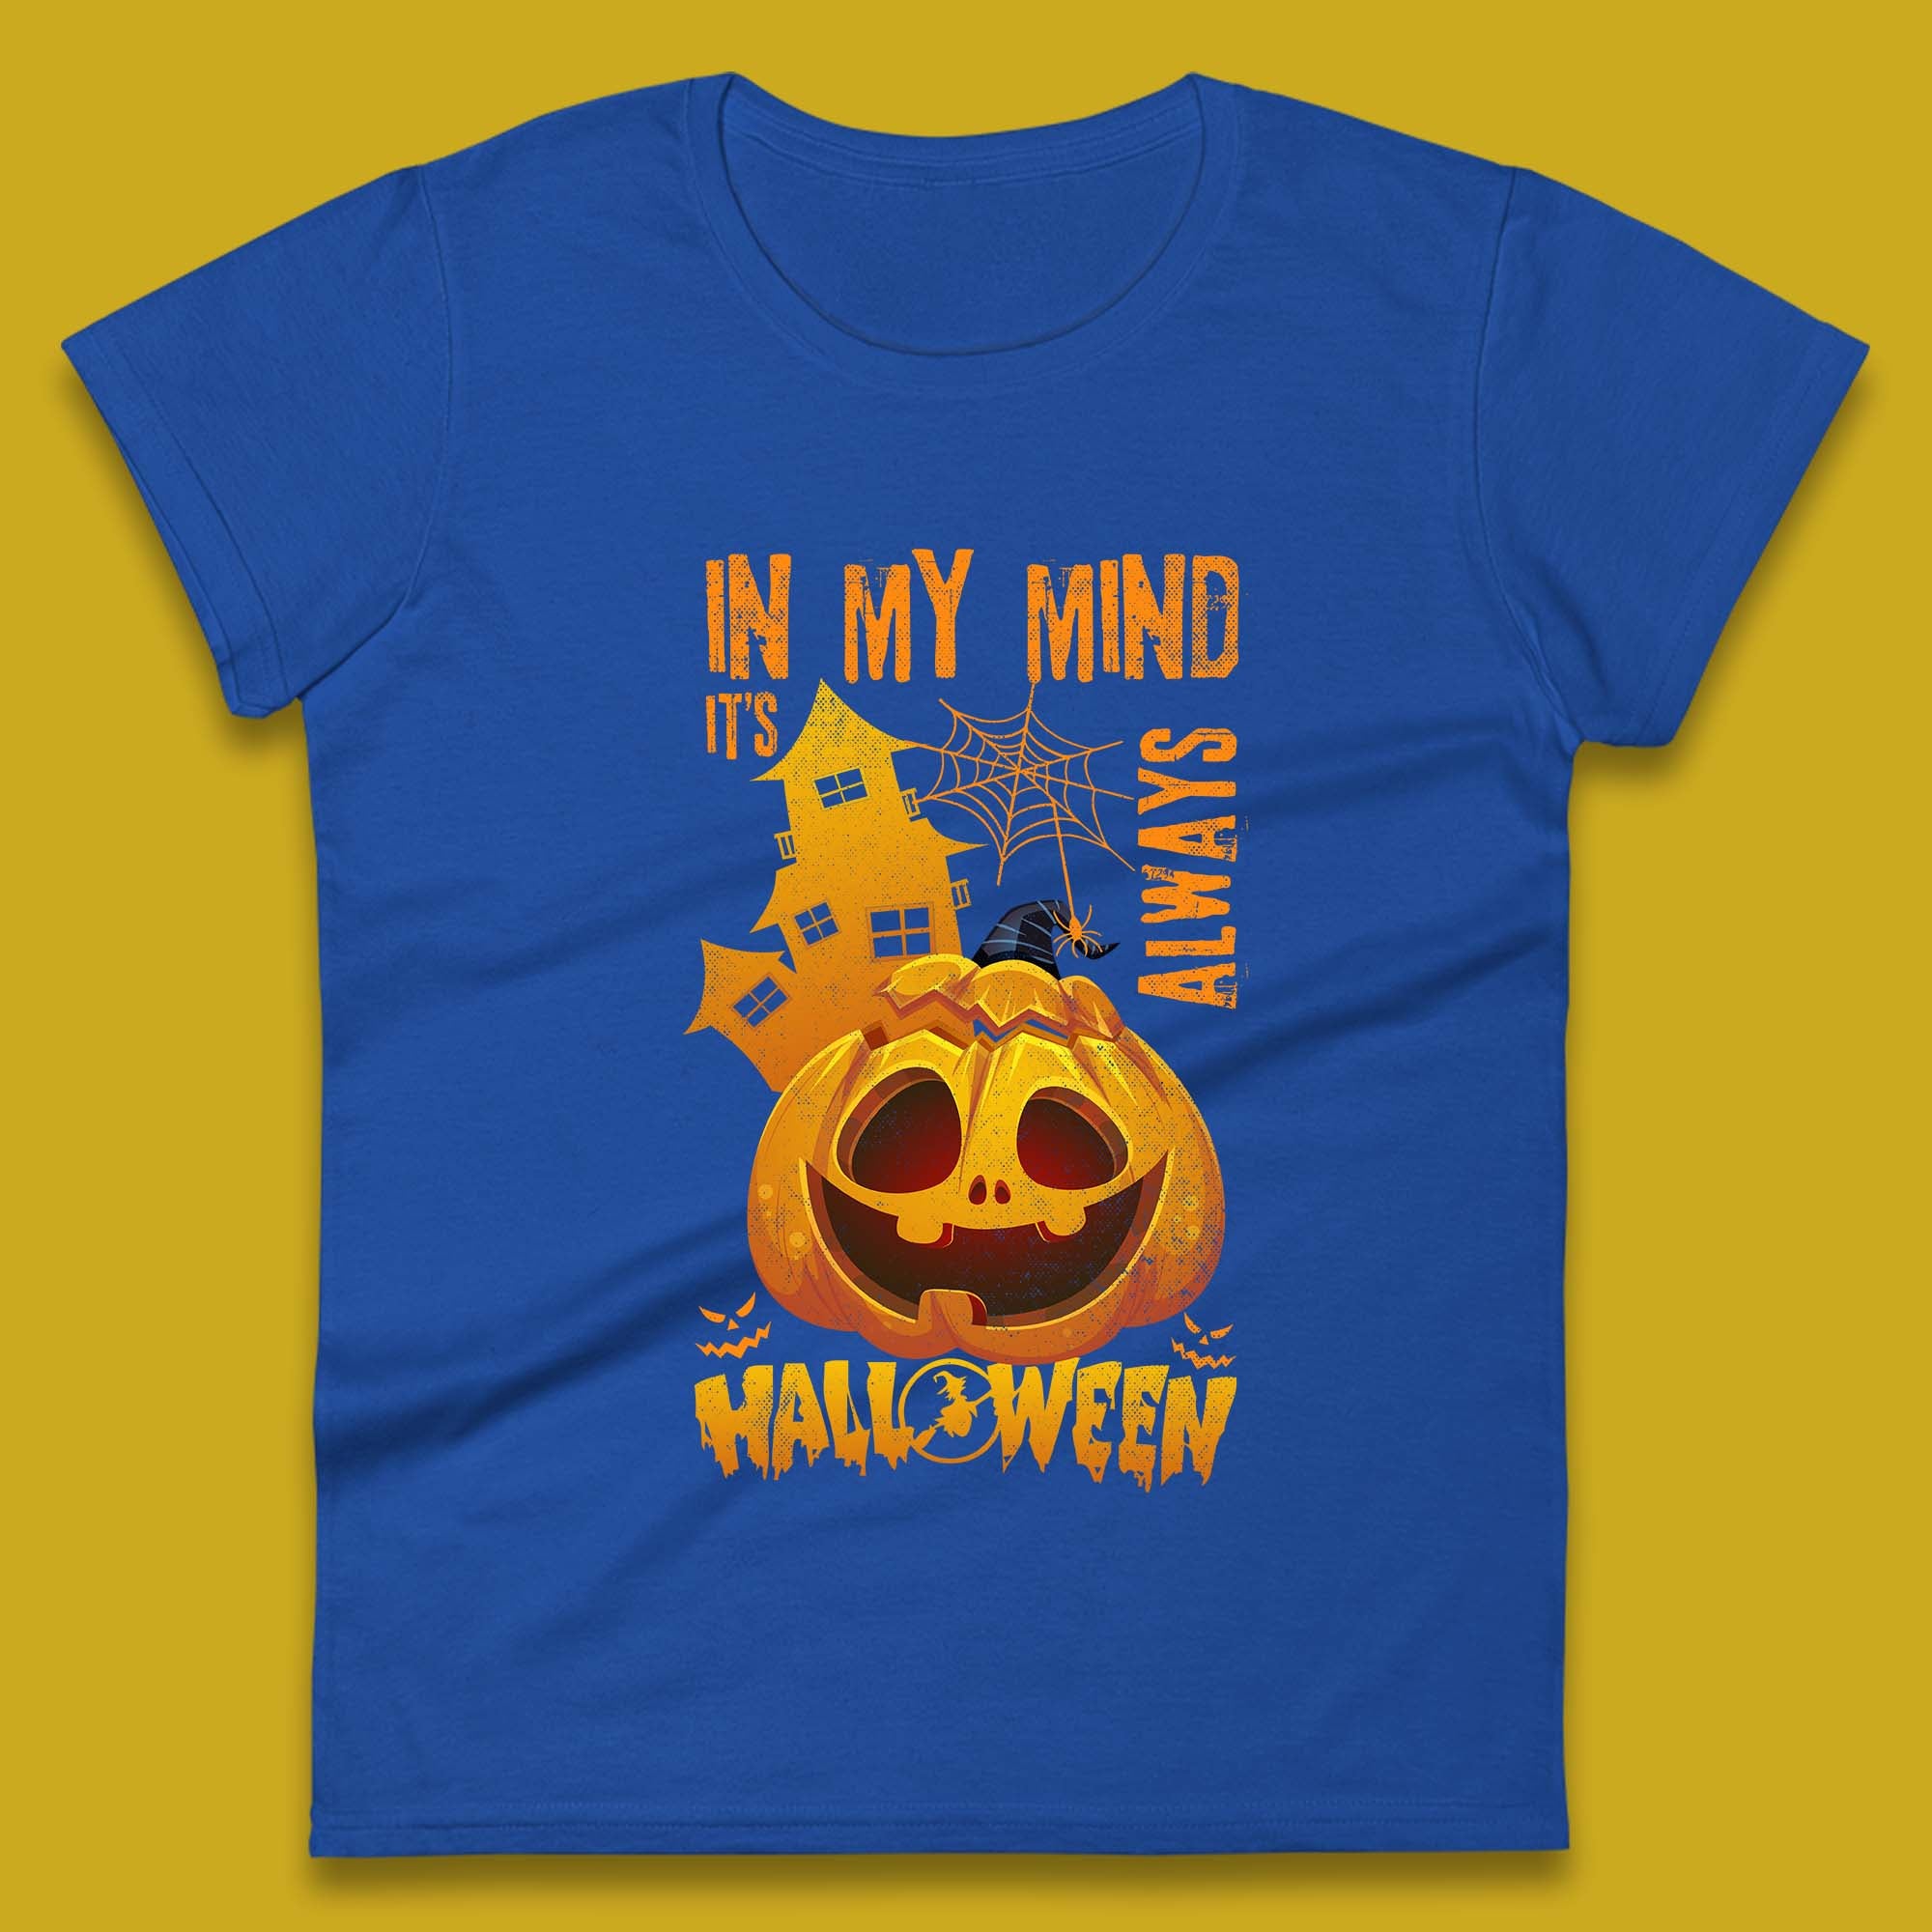 In My Mind It's Always Halloween Haunted House Horror Scary Monster Pumpkin Womens Tee Top